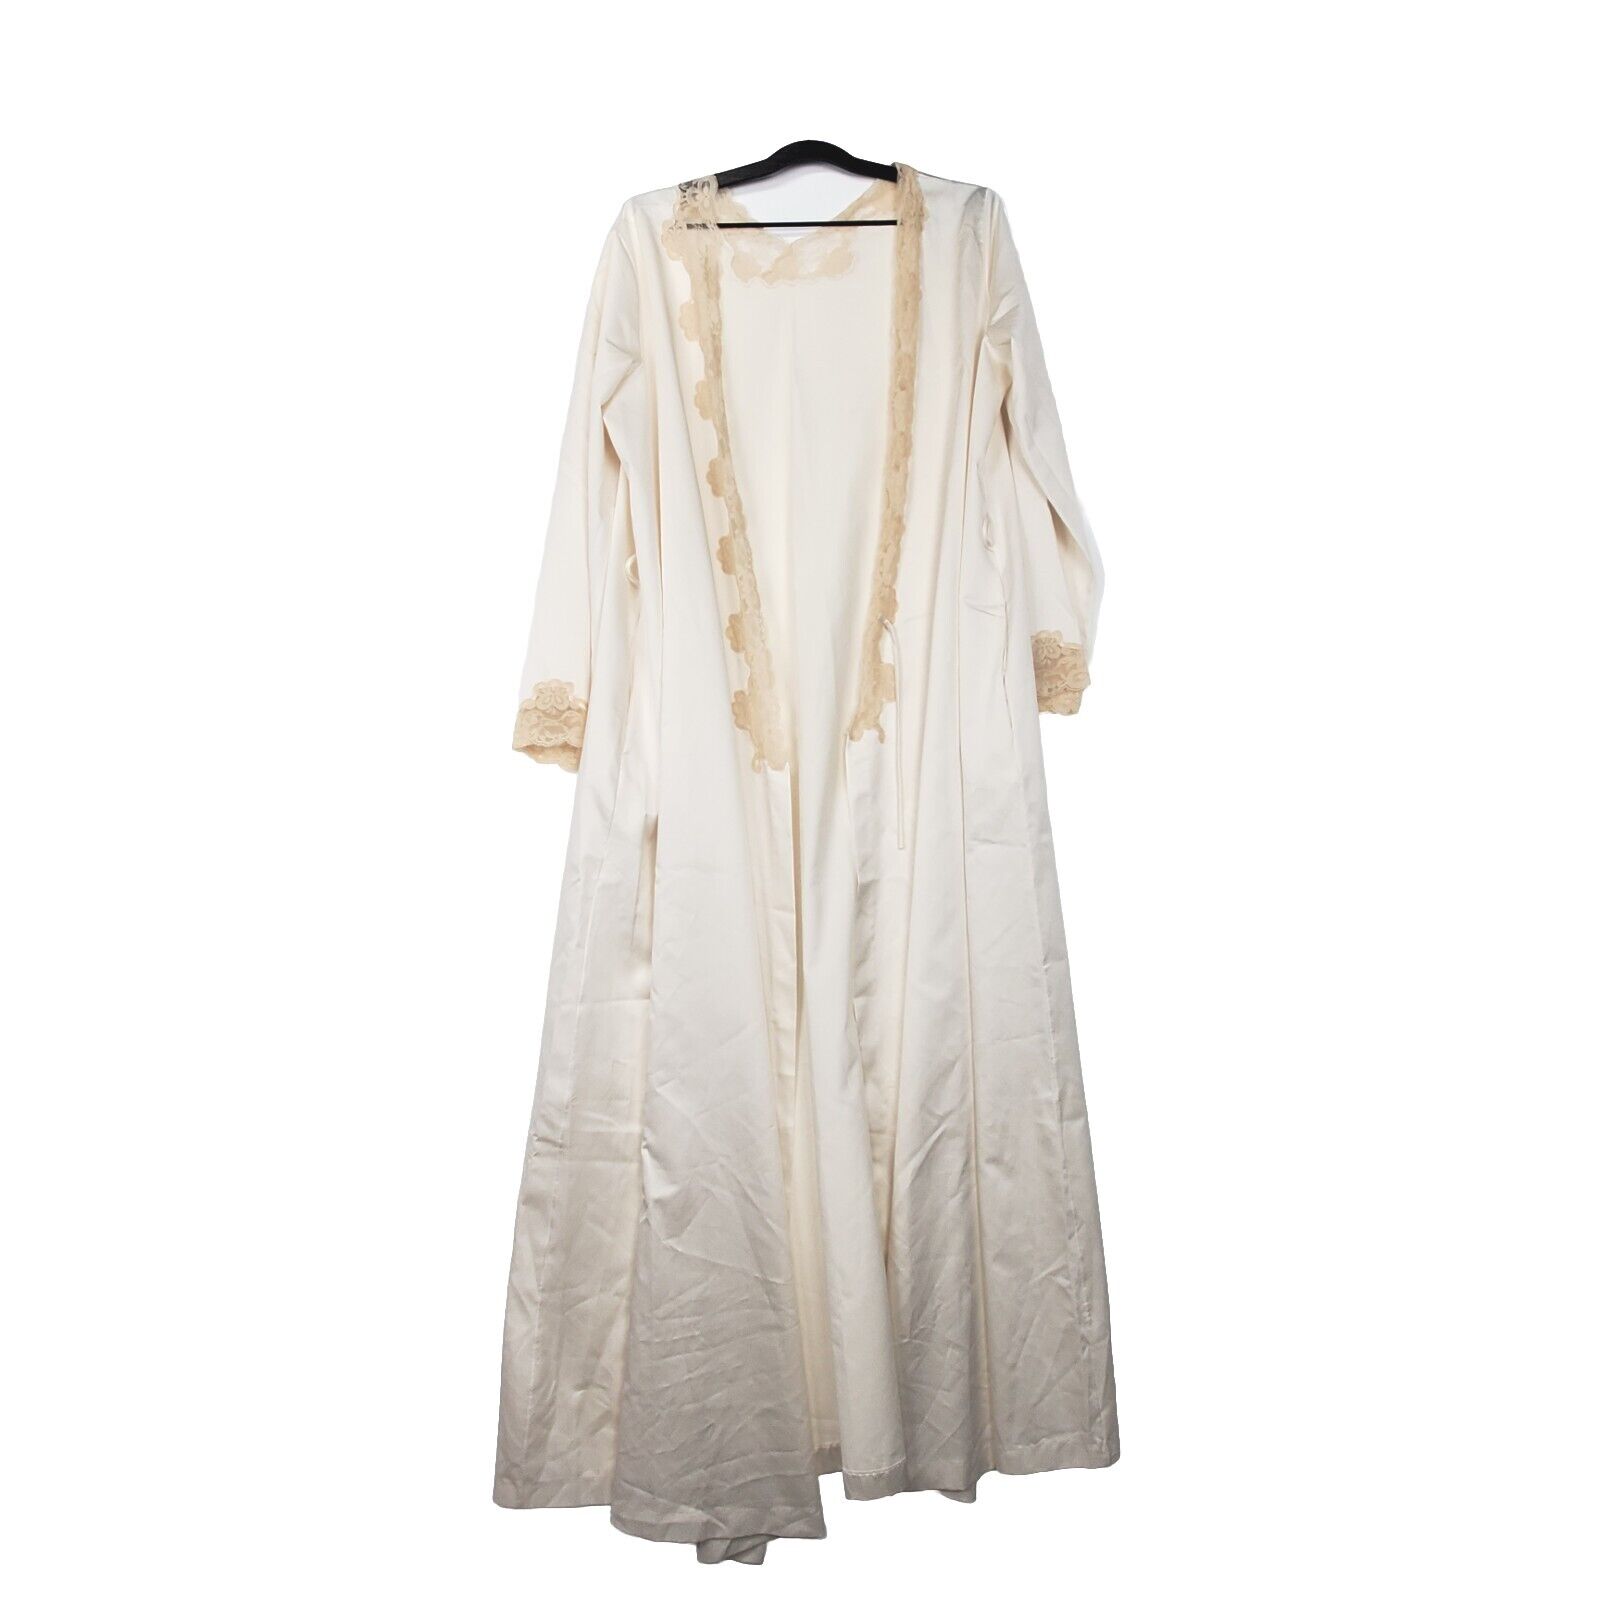 Vintage Emilio Pucci Robe Dressing Gown Size Medium Ivory Beige Lace No Belt